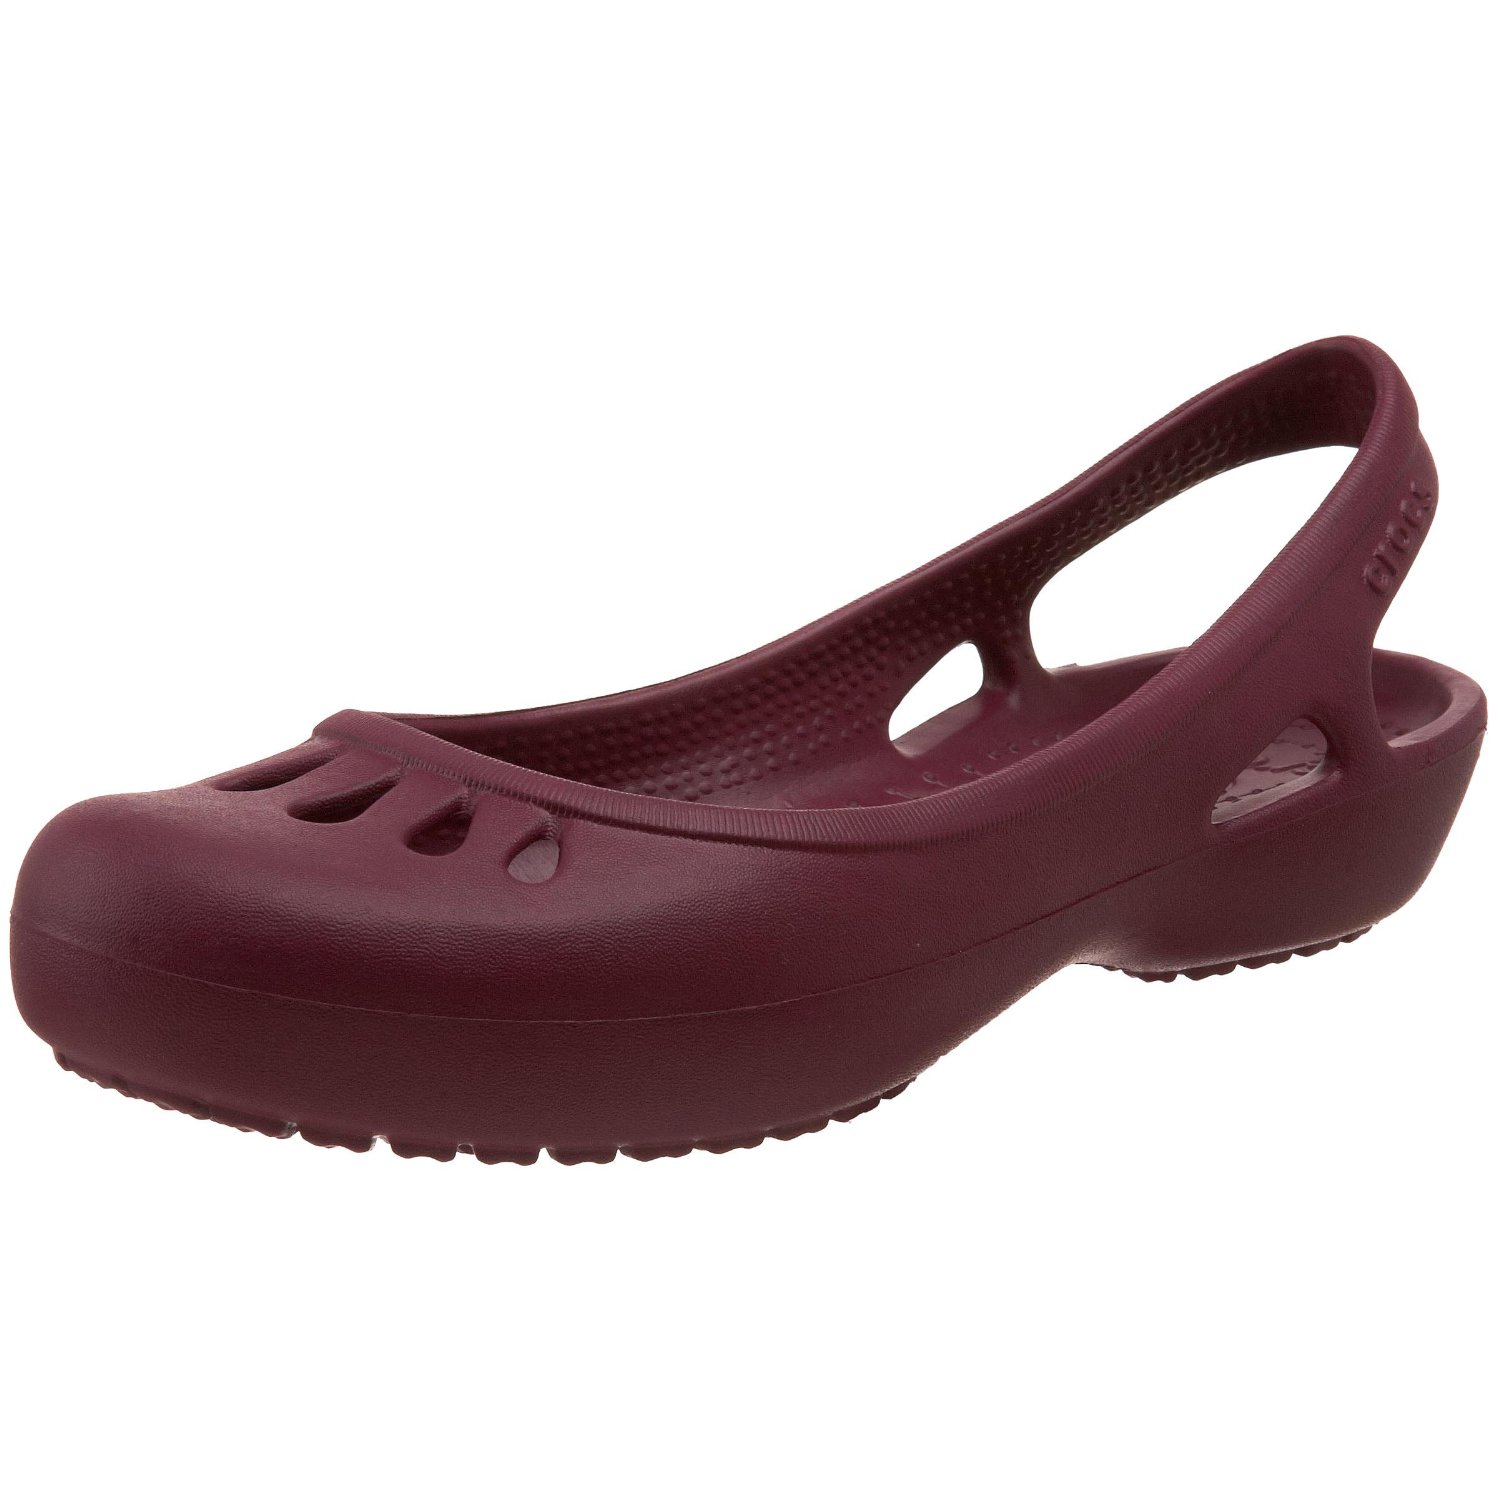 Crocs Shoes Women: crocs Women's Malindi Flat Slingback